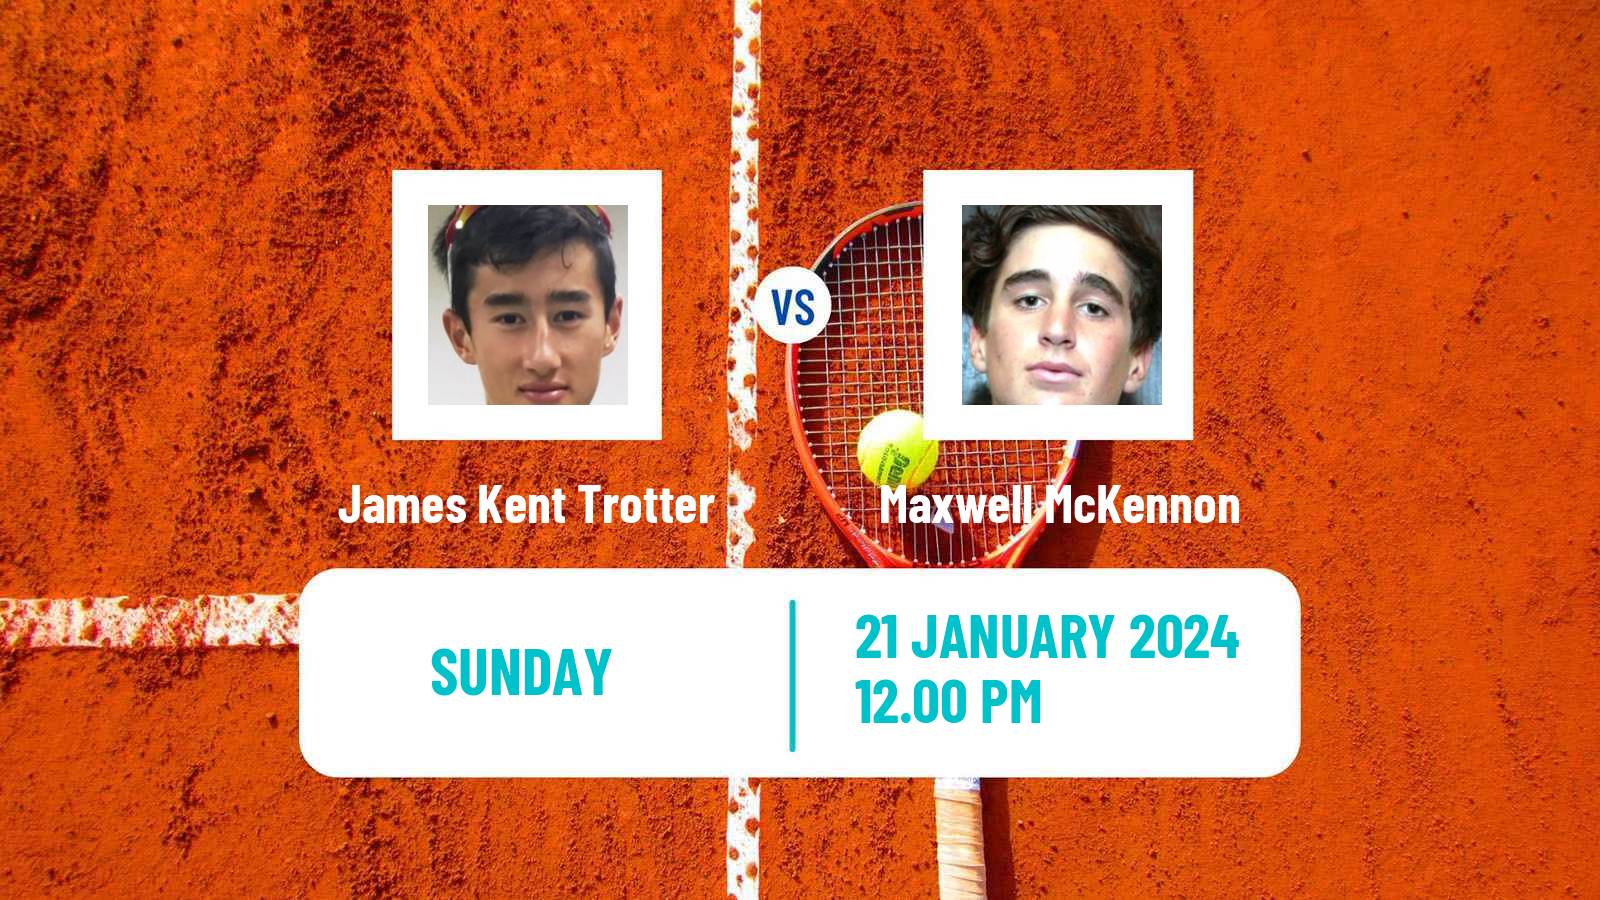 Tennis Indian Wells 2 Challenger Men James Kent Trotter - Maxwell McKennon